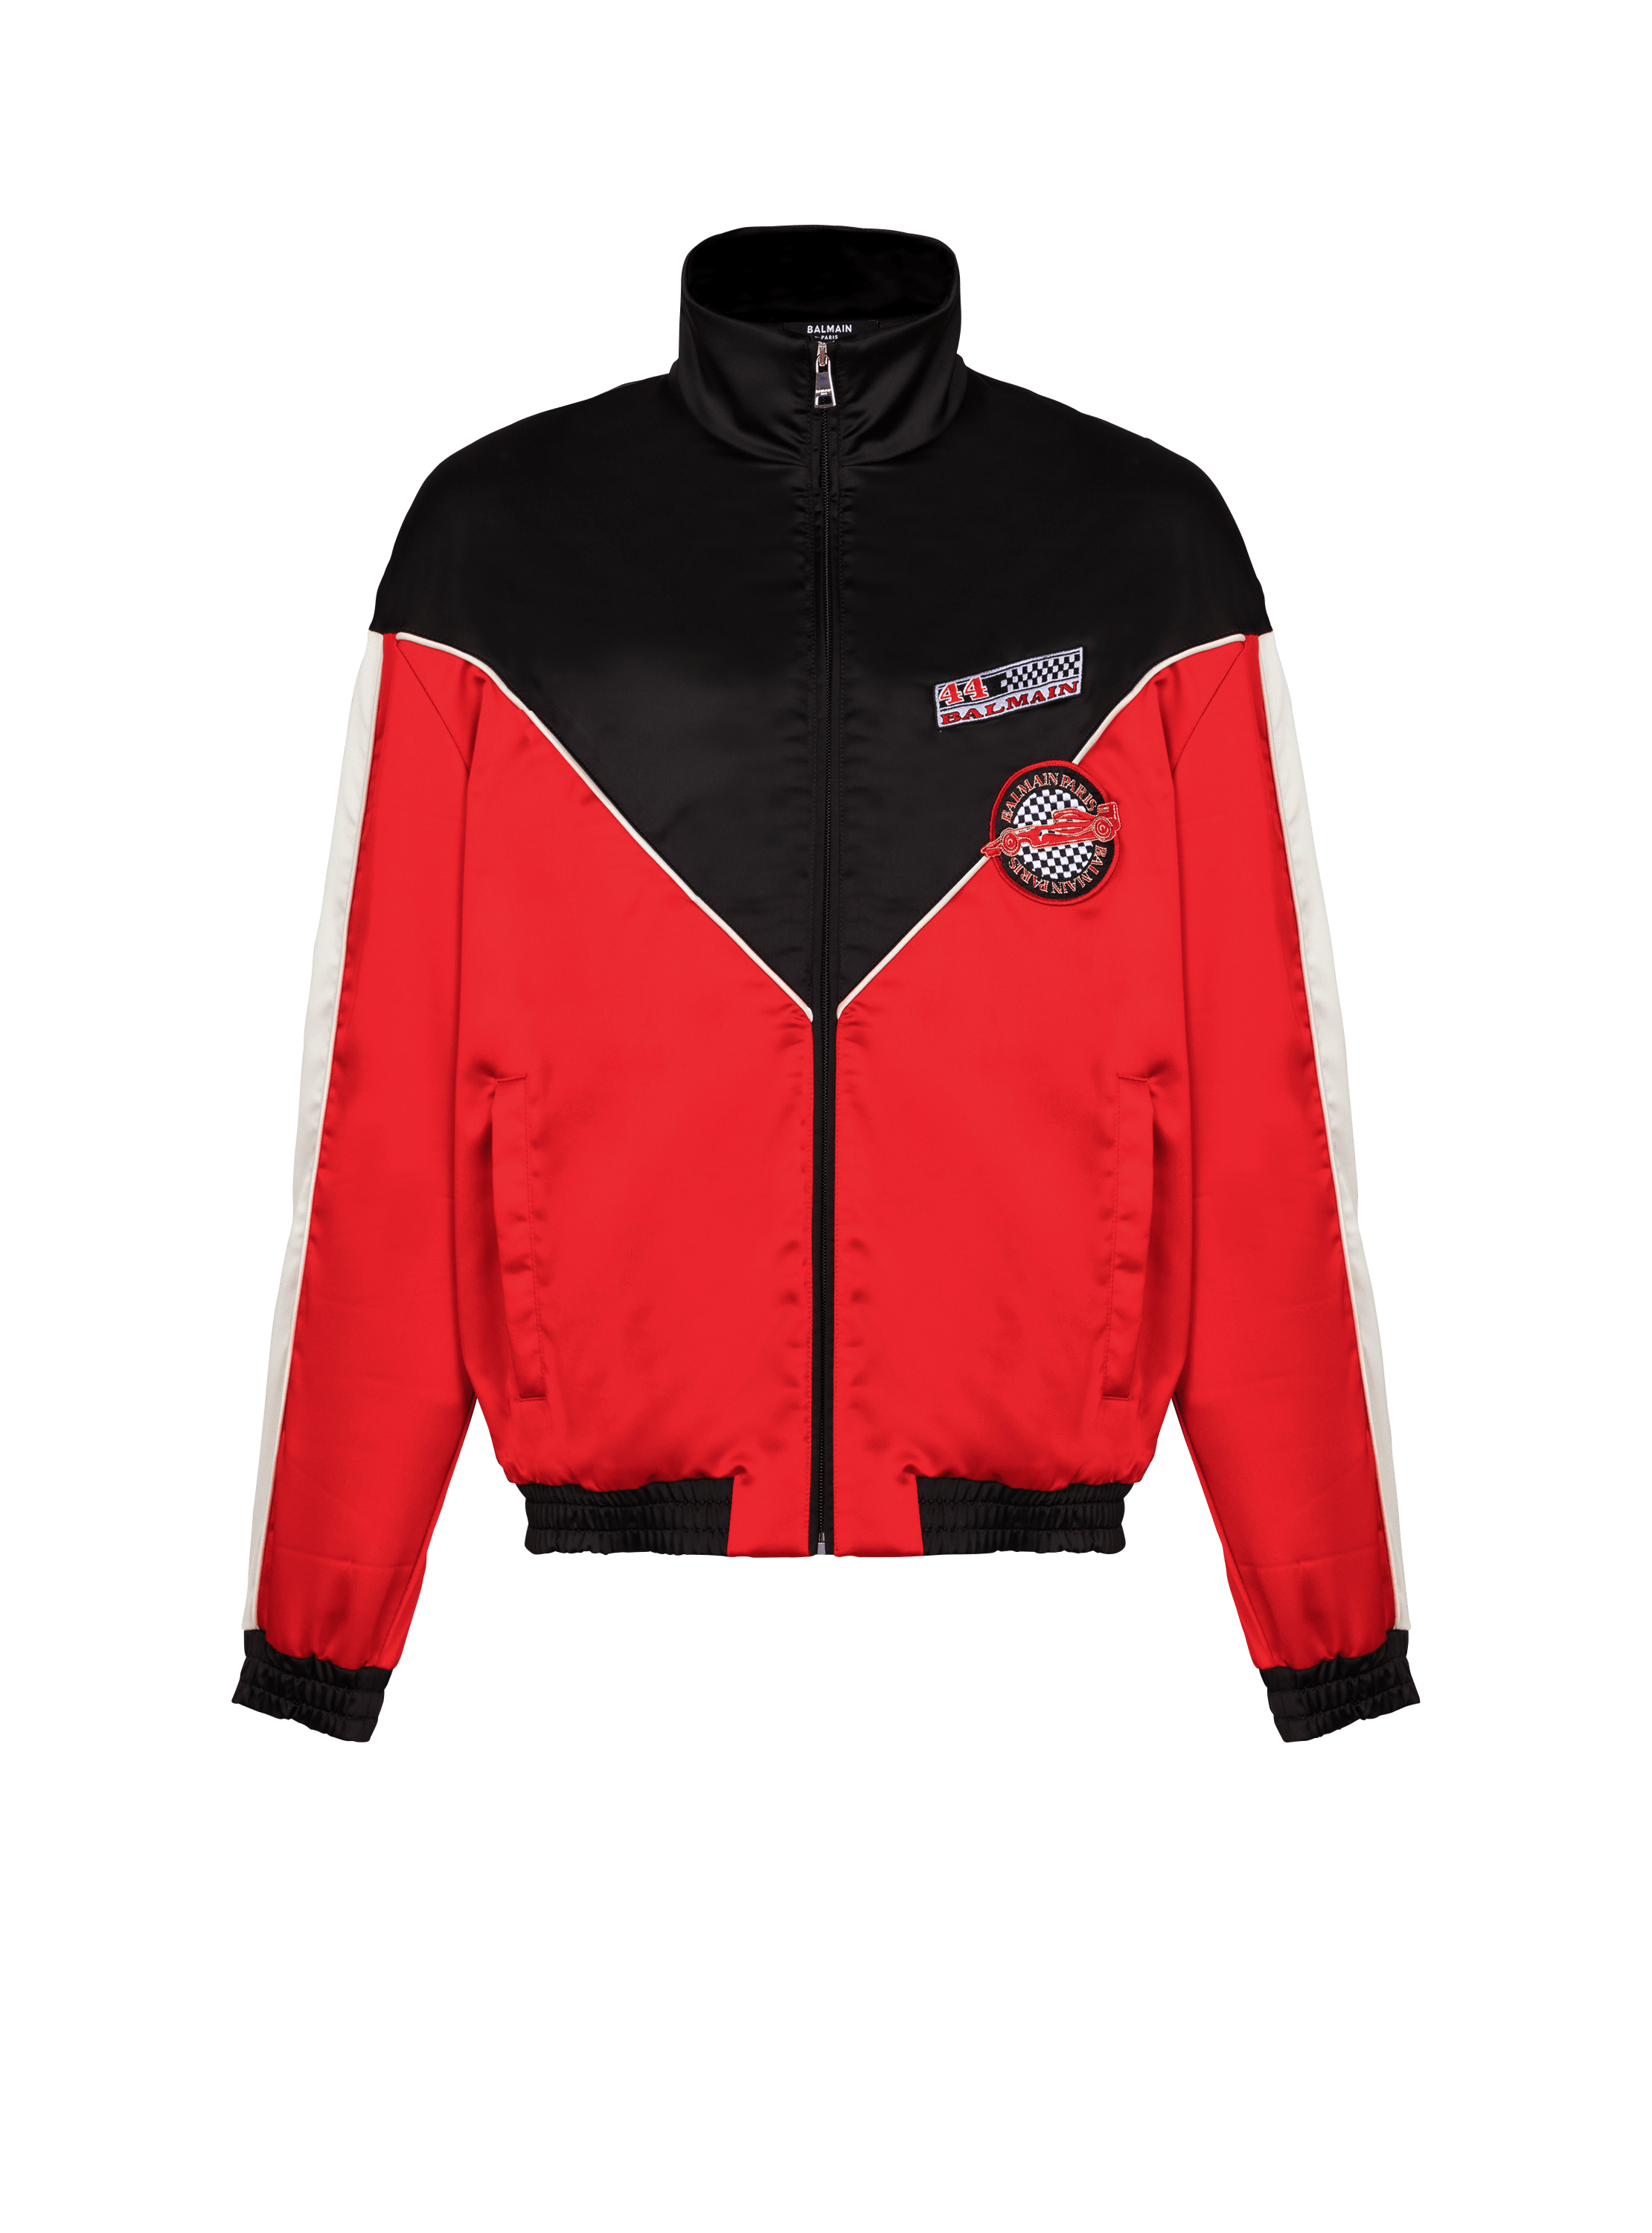 Satin Balmain Racing jacket in three colours